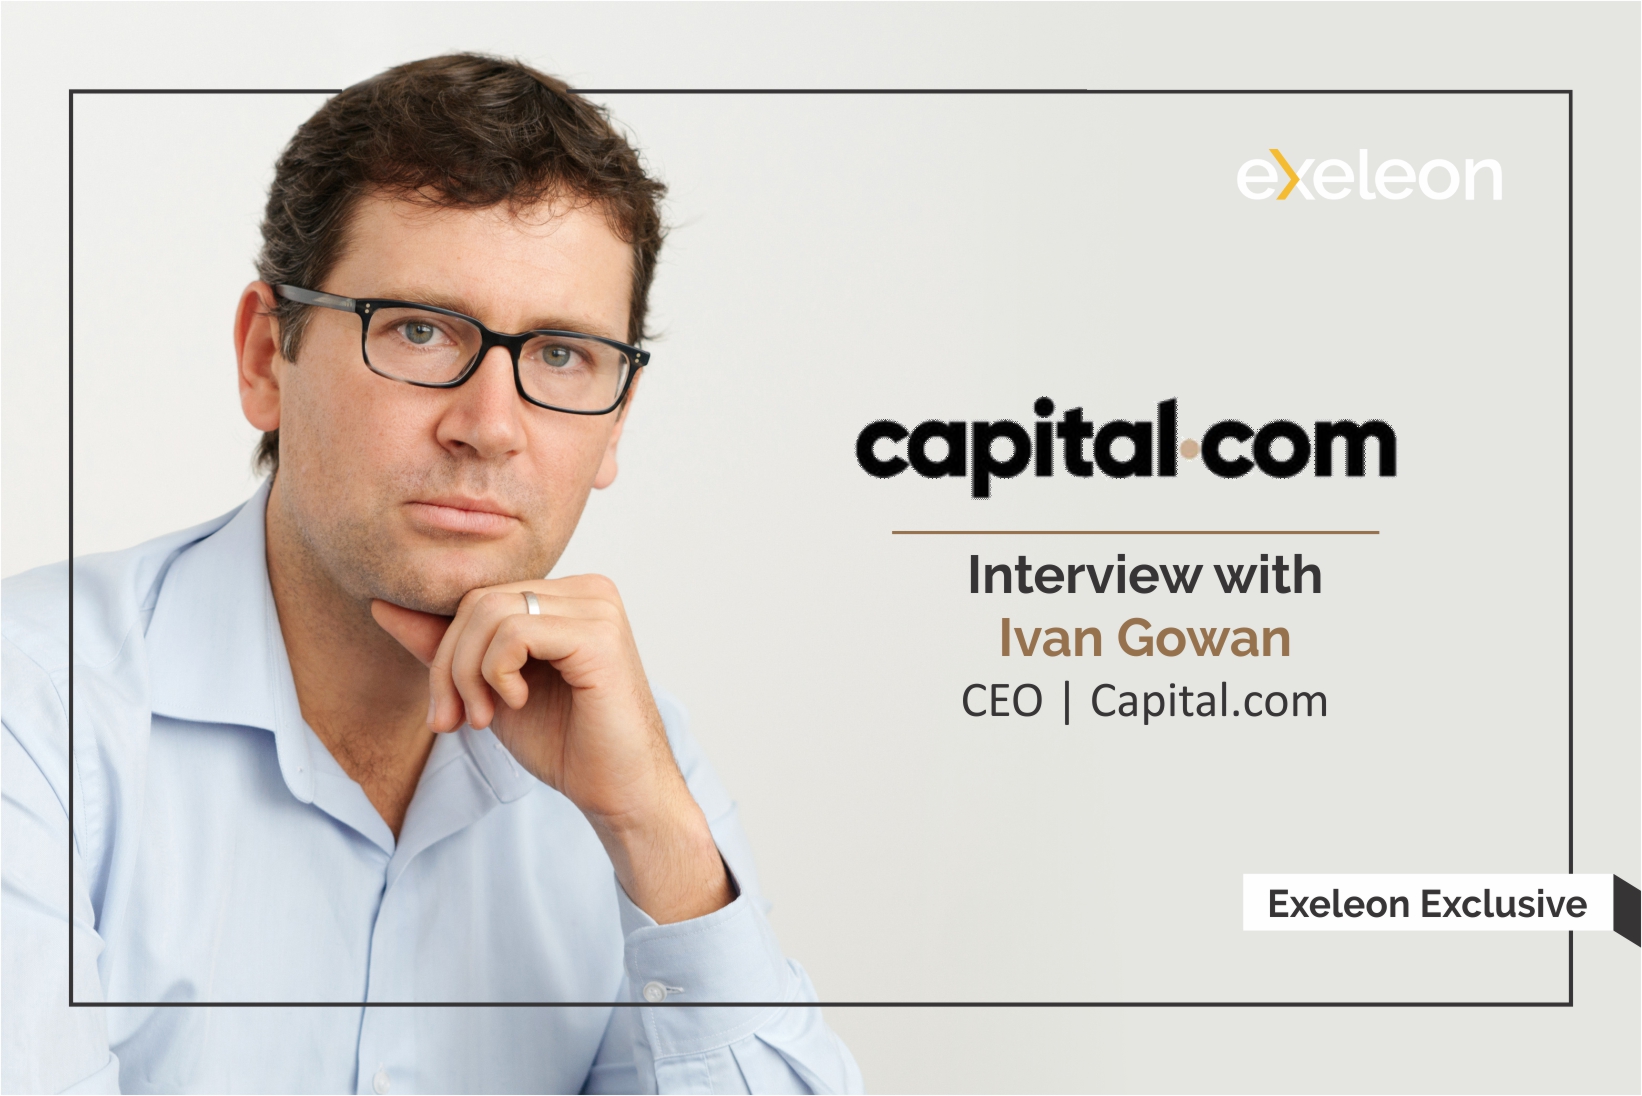 Capital.com CEO Ivan Gowan Interview